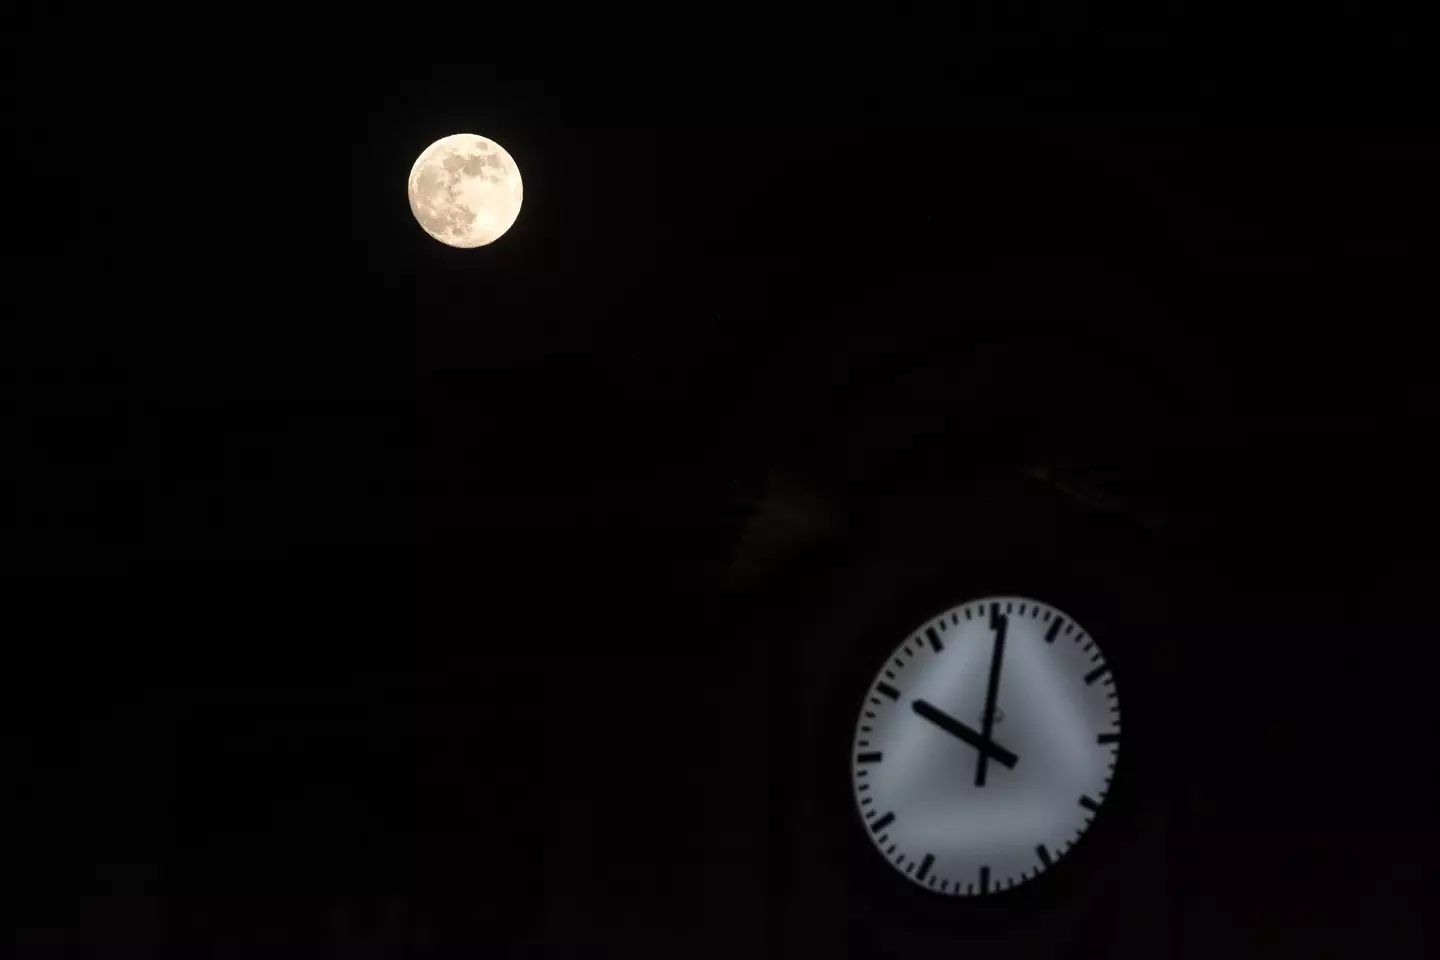 NASA will look at creating a new clock for the moon. 